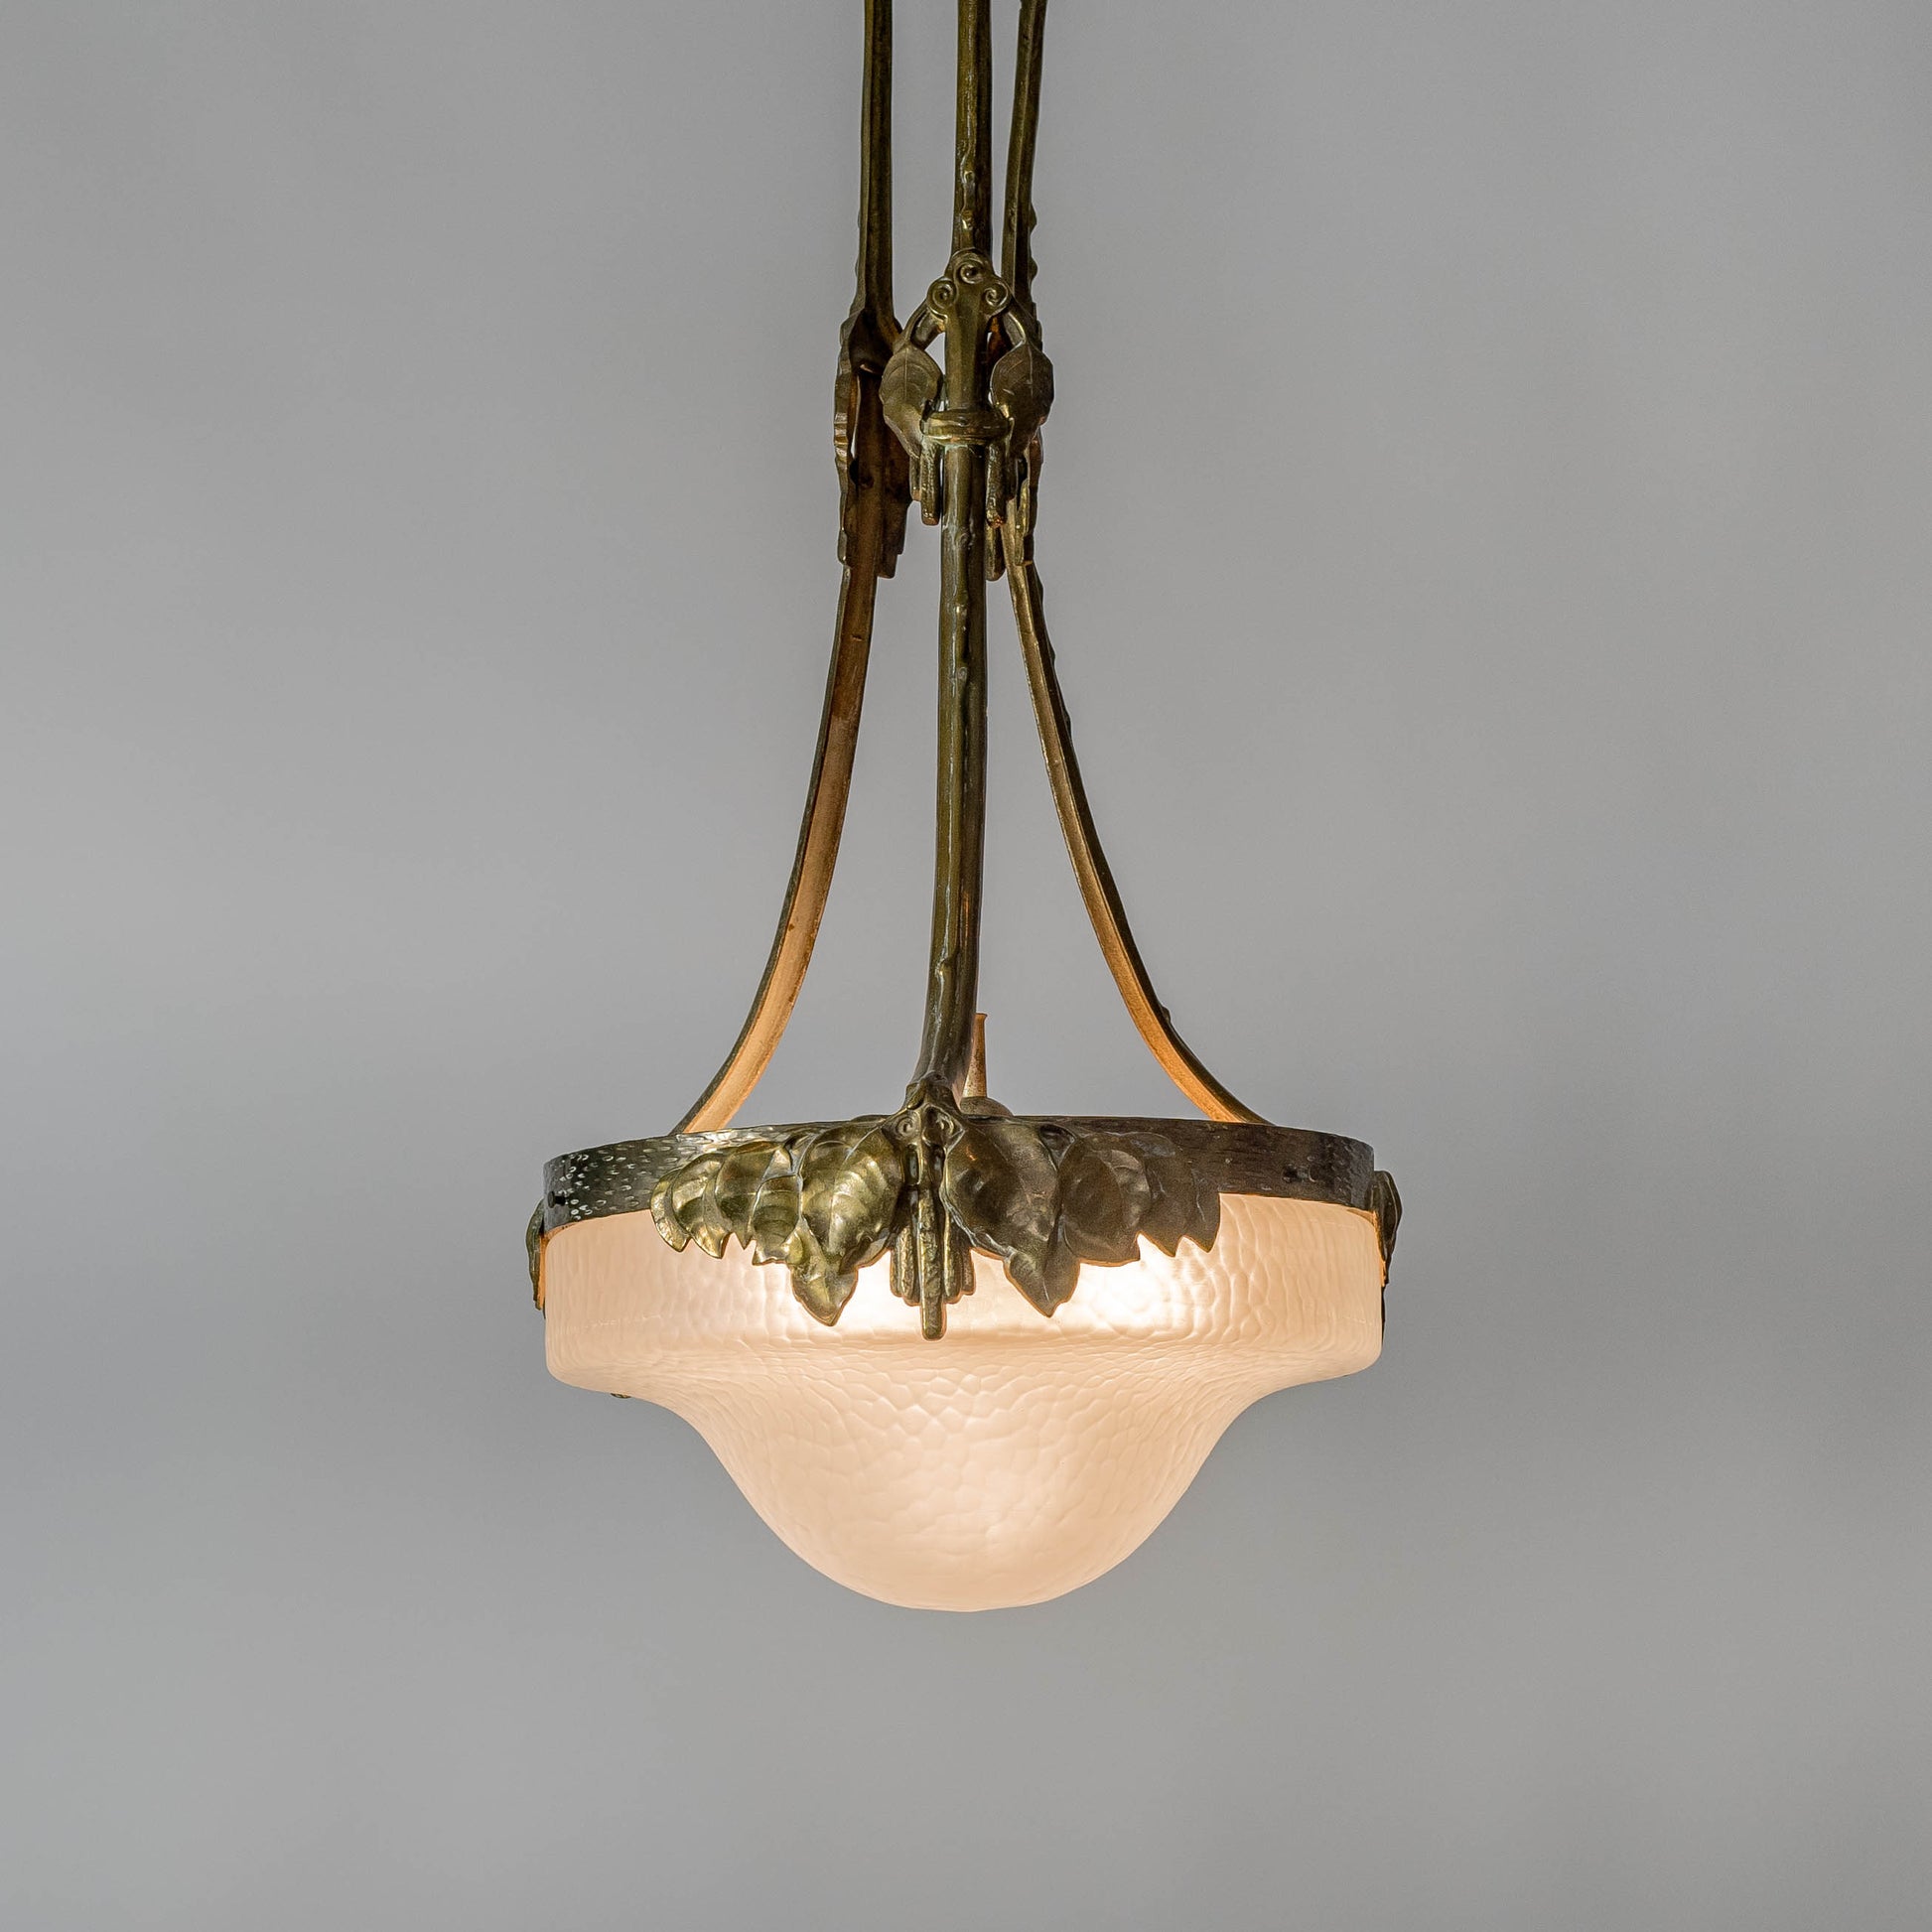 Jugendtaklampa i guldpatinerad brons från Böhlmarks, 1910-tal. 80cm hög och diam. 40cm. An art nouveau ceiling light in bronze. Made by Böhlmarks around 1910. H: 80cm/31,5″ and diam. 40cm/15,7″